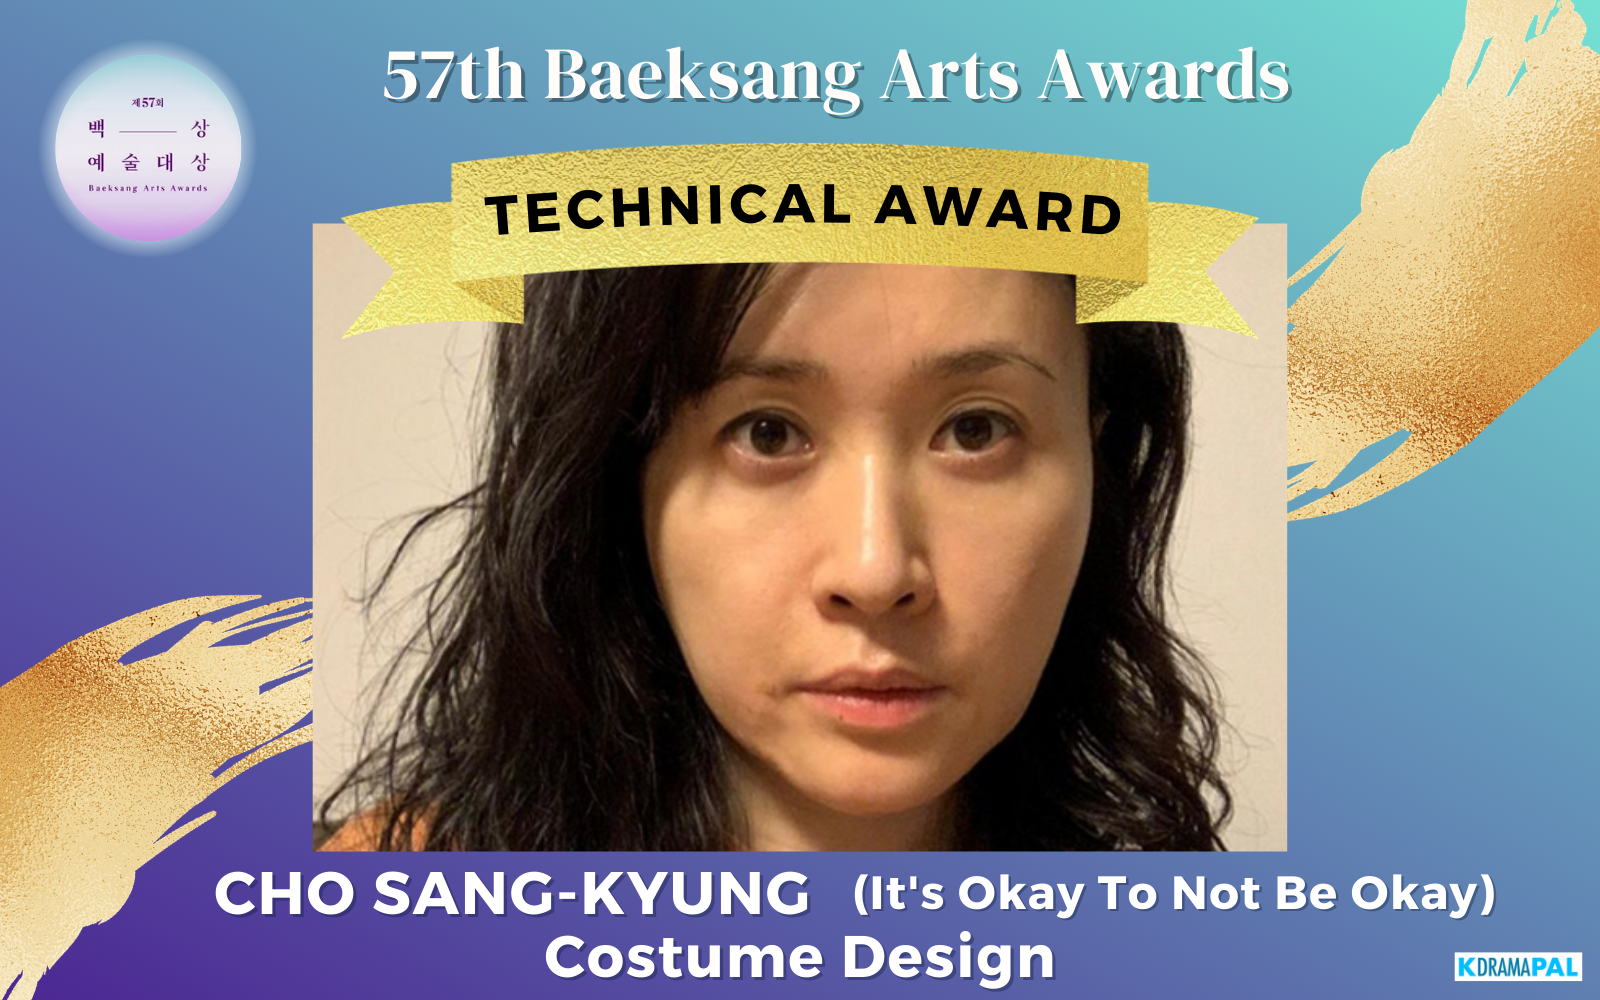 Premio Técnico 57th Baeksang Arts Awards - Cho Sang-kyung por Está bien no estar bien